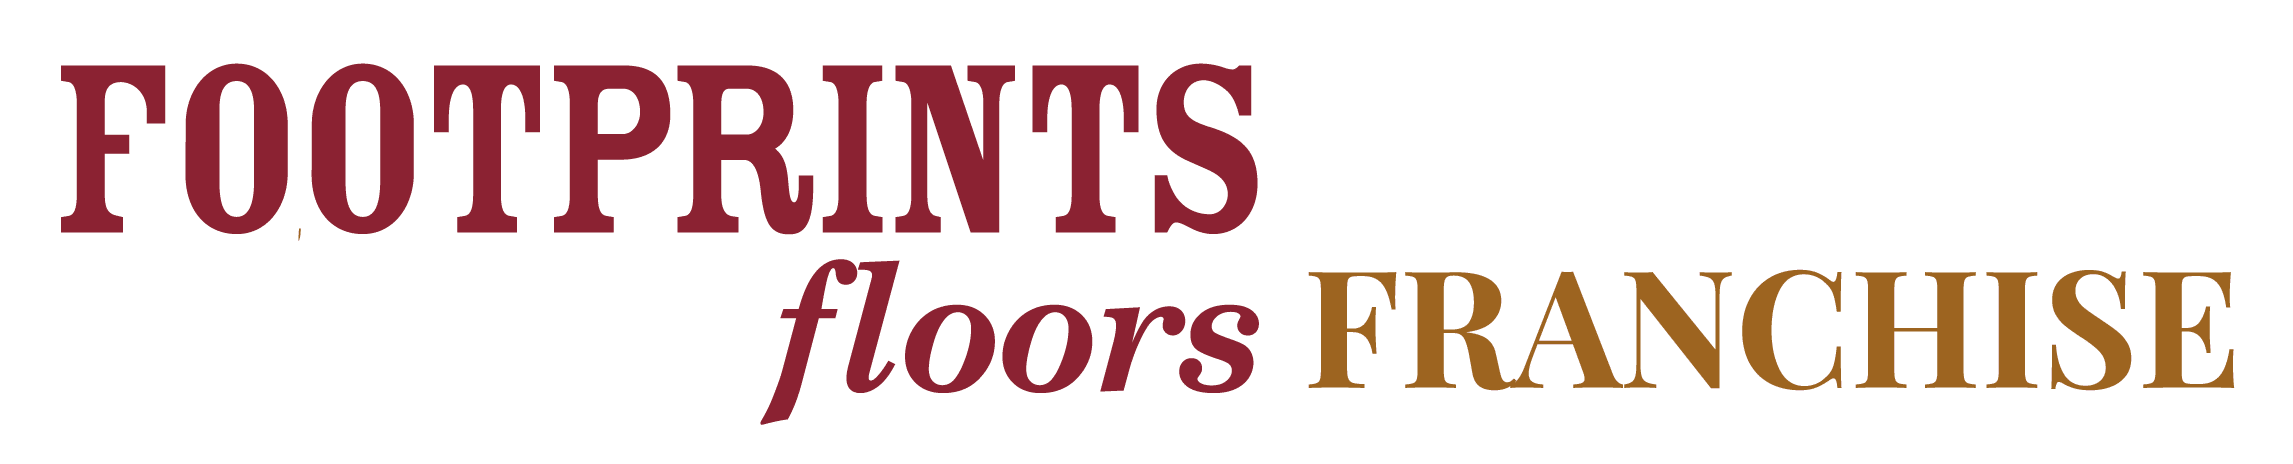 Footprints Floors home improvement franchise is an amazing opportunity for aspiring entrepreneurs.